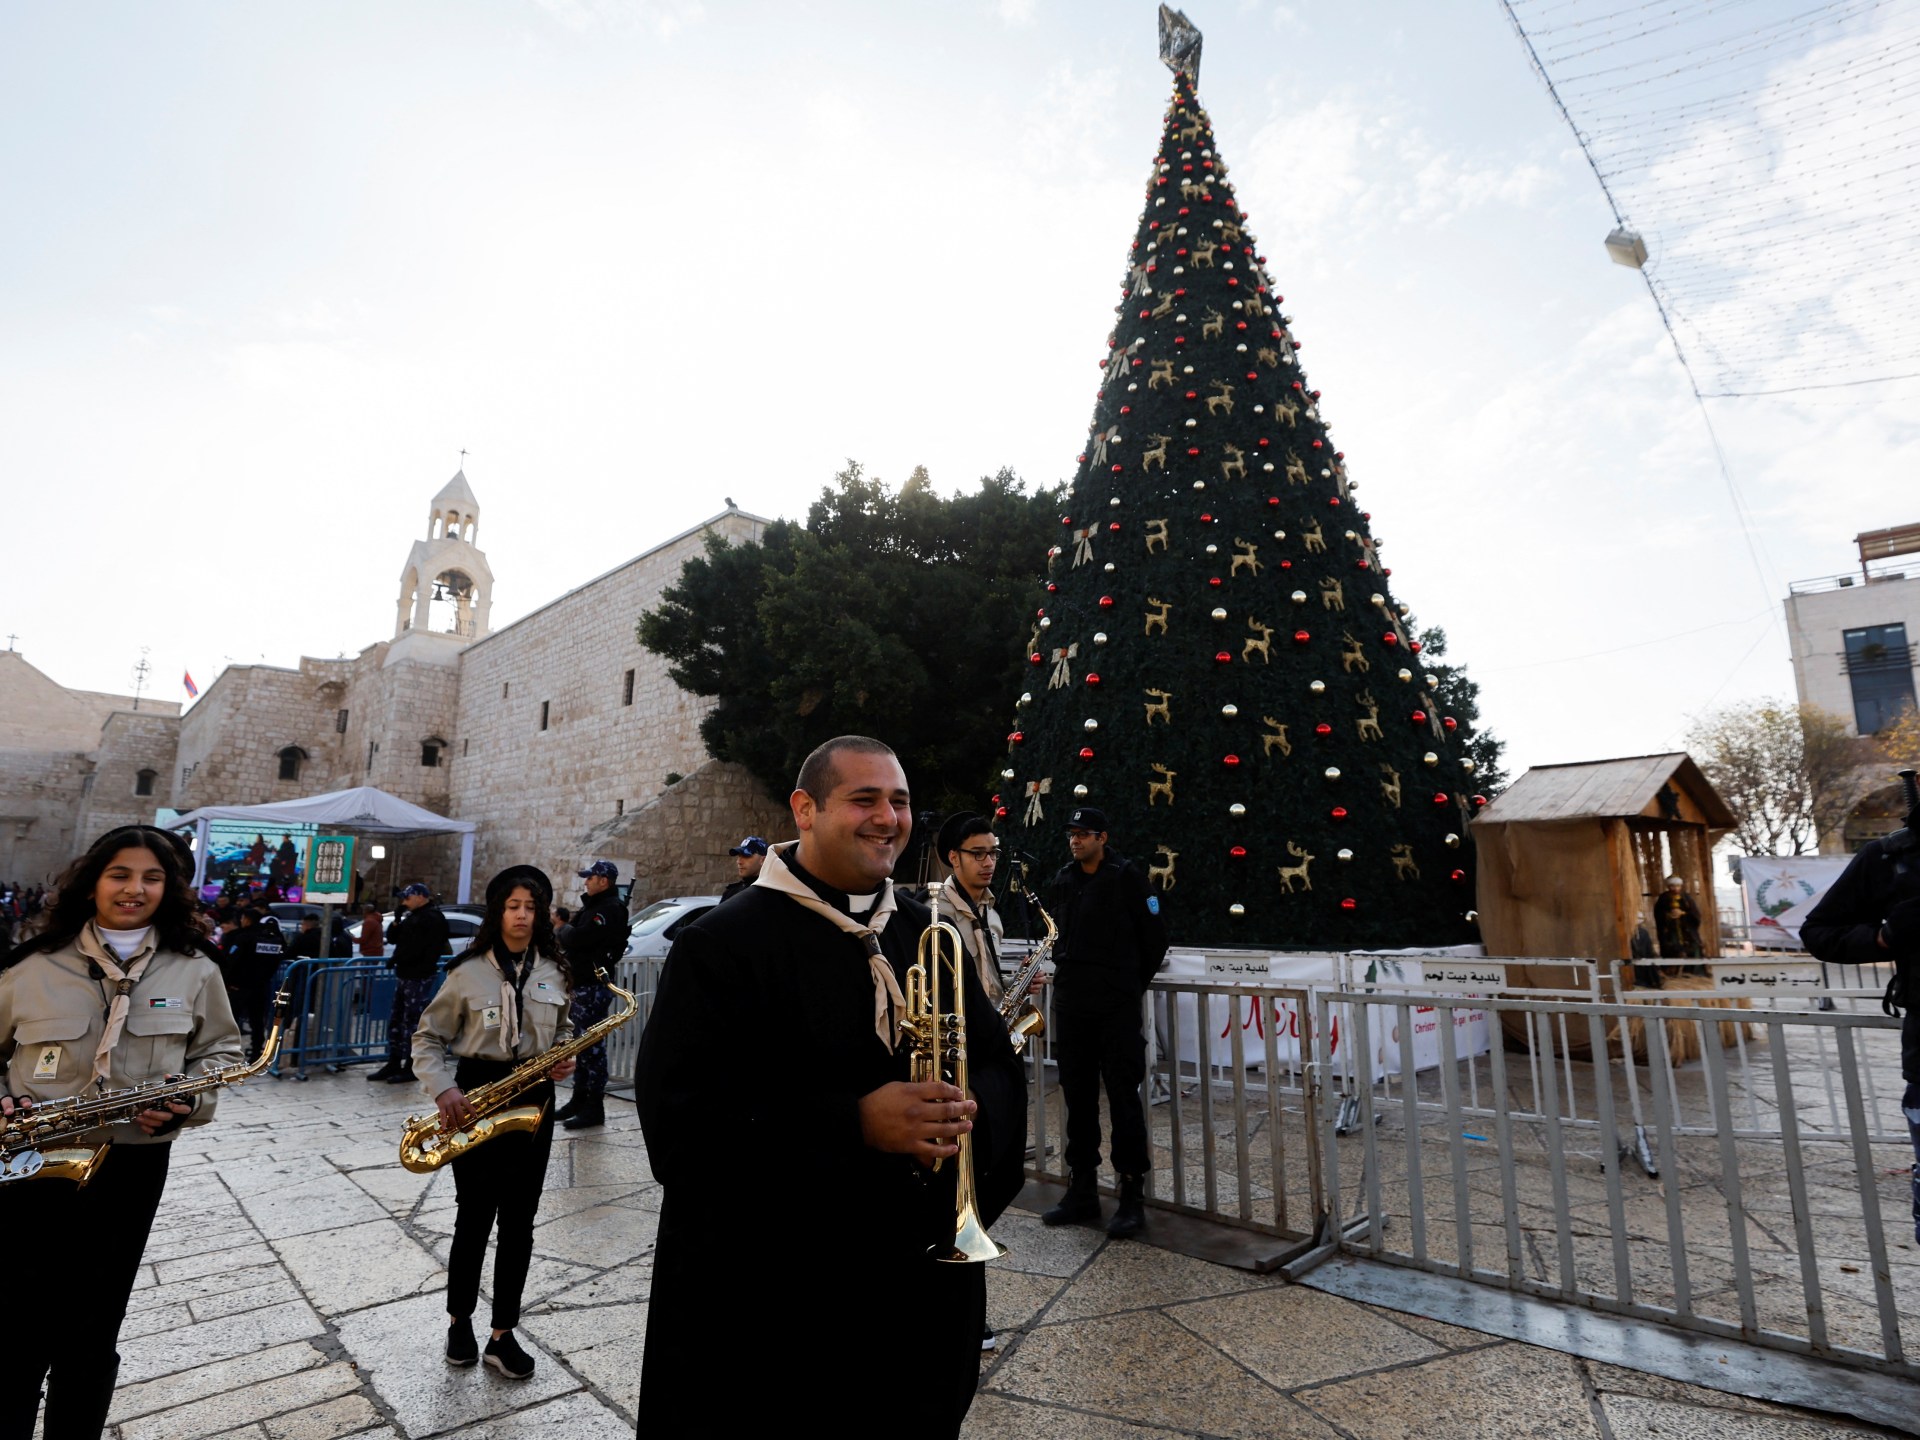 Bethlehem rebounds from pandemic, lifting Christmas spirits